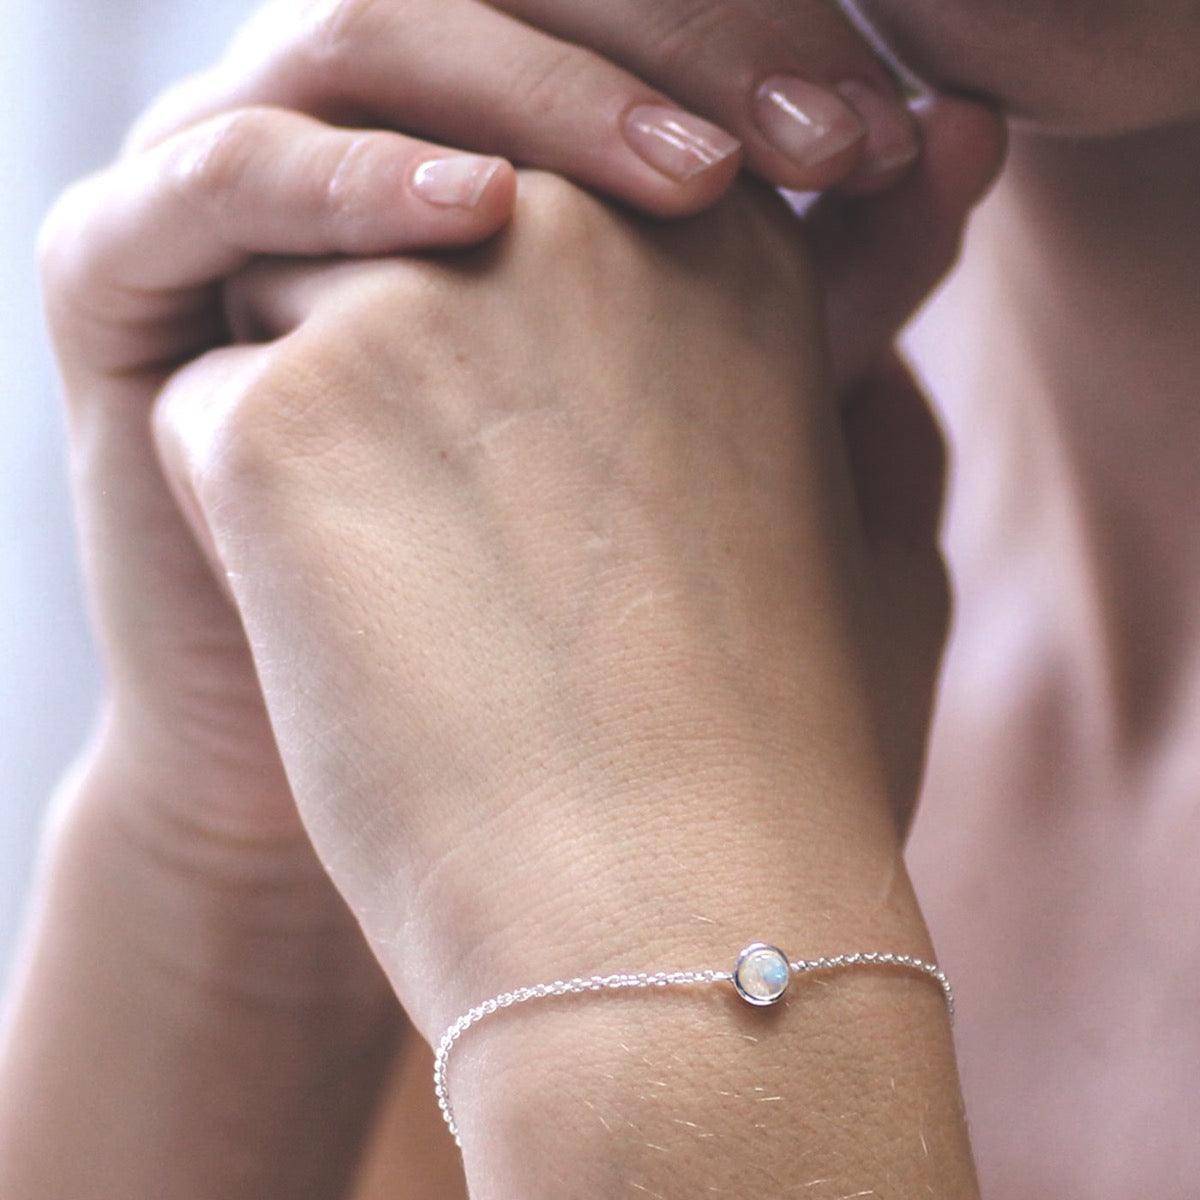 Silver and moonstone birthstone bracelet